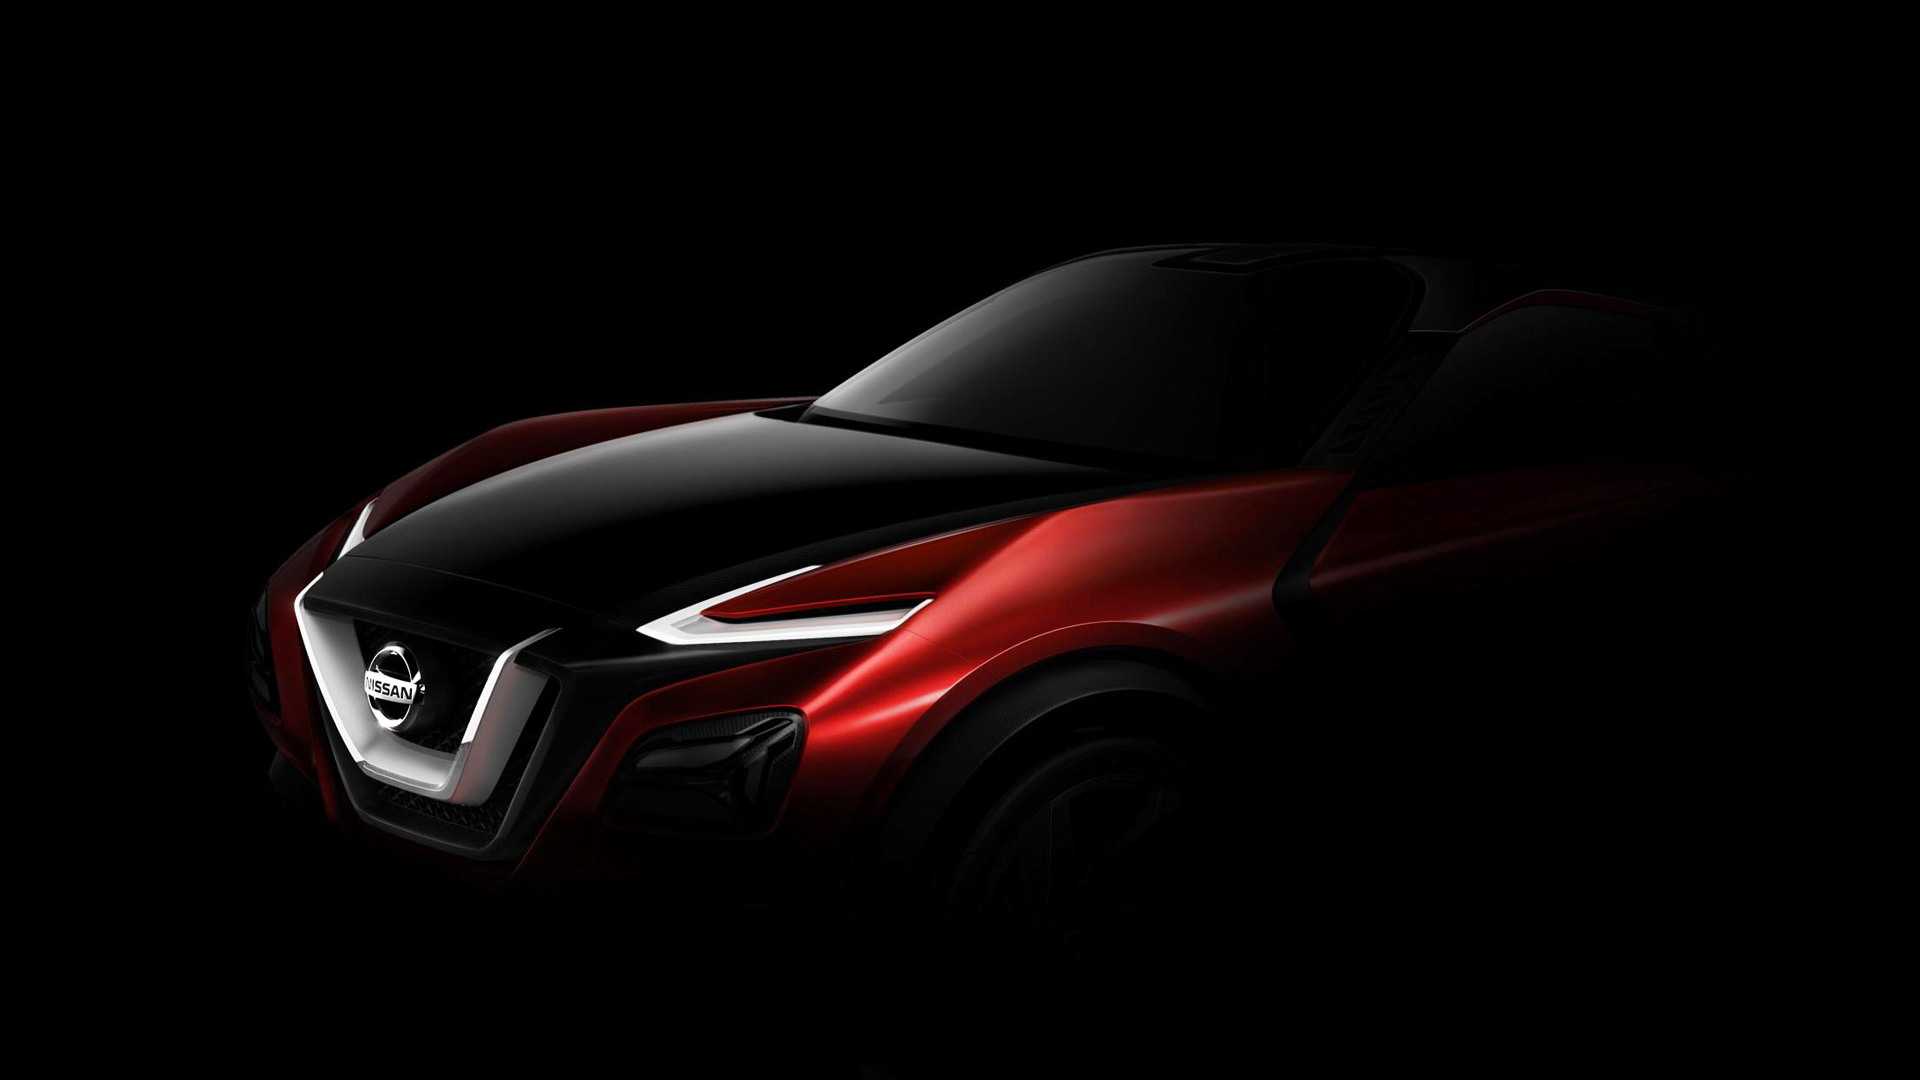 Teaser for Nissan Gripz concept debuting at 2015 Frankfurt Auto Show